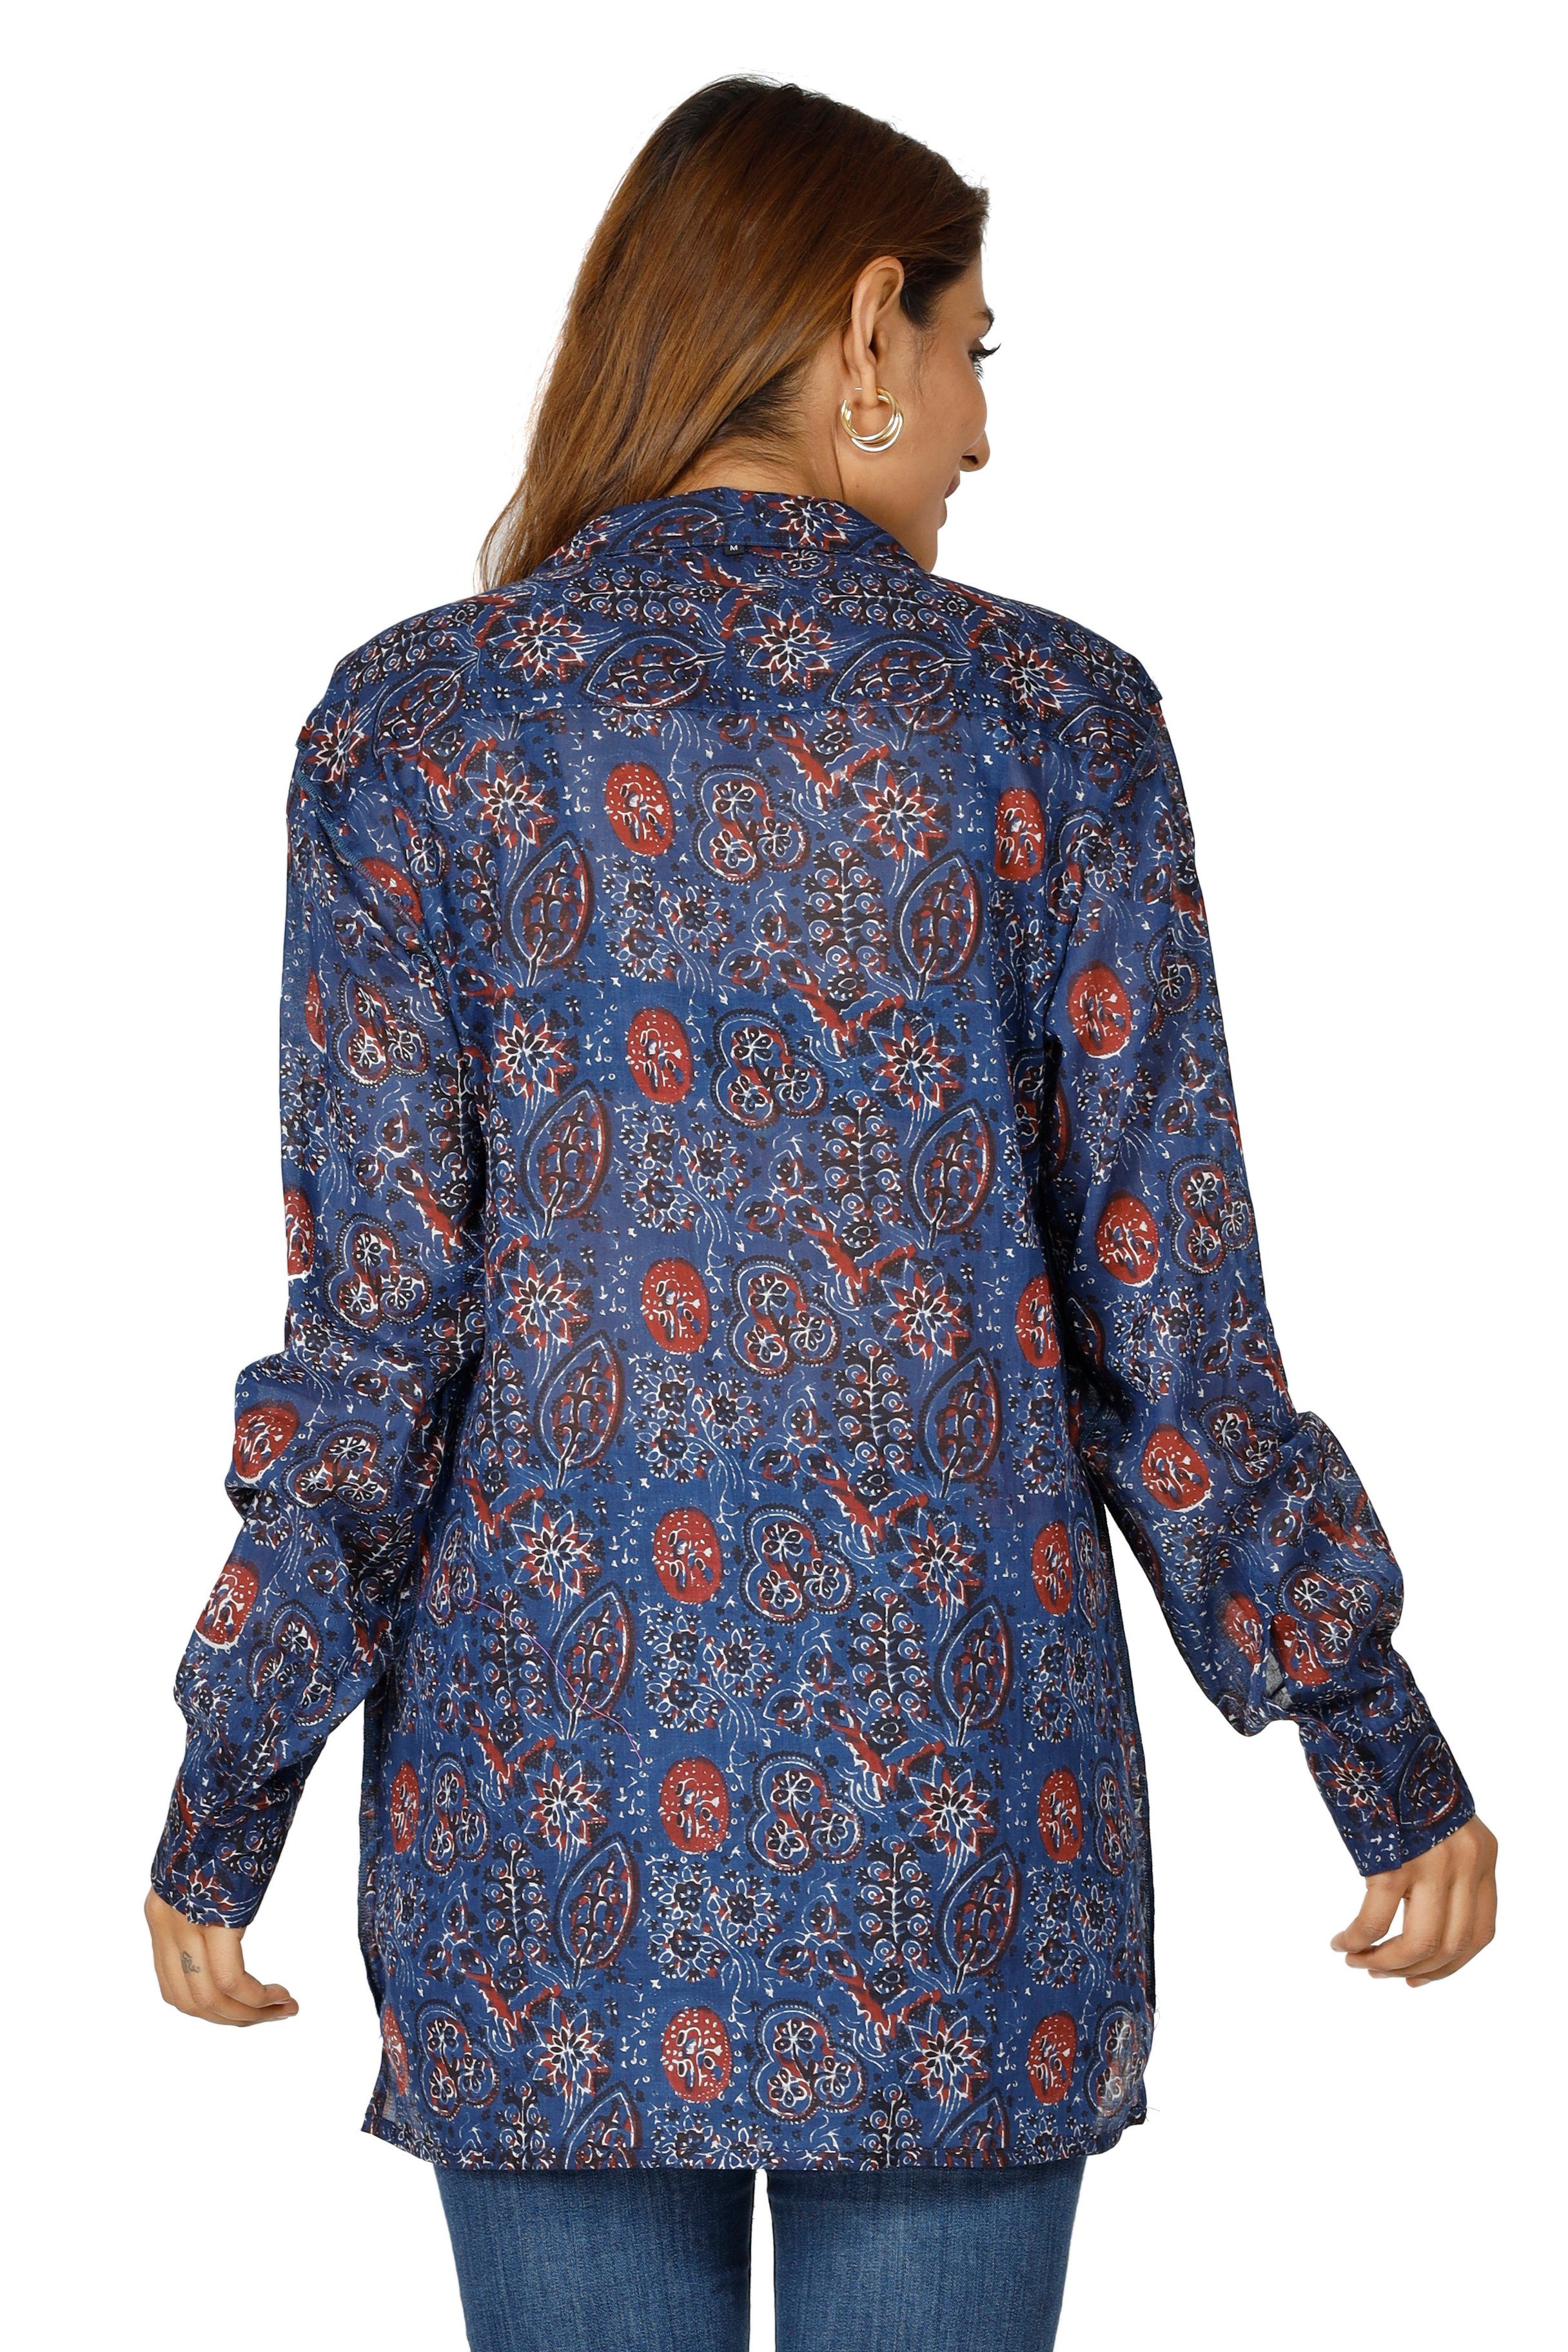 Guru-Shop Longbluse Handbedrucktes Boho Langarmhemd, alternative luftiges.. blau Bekleidung